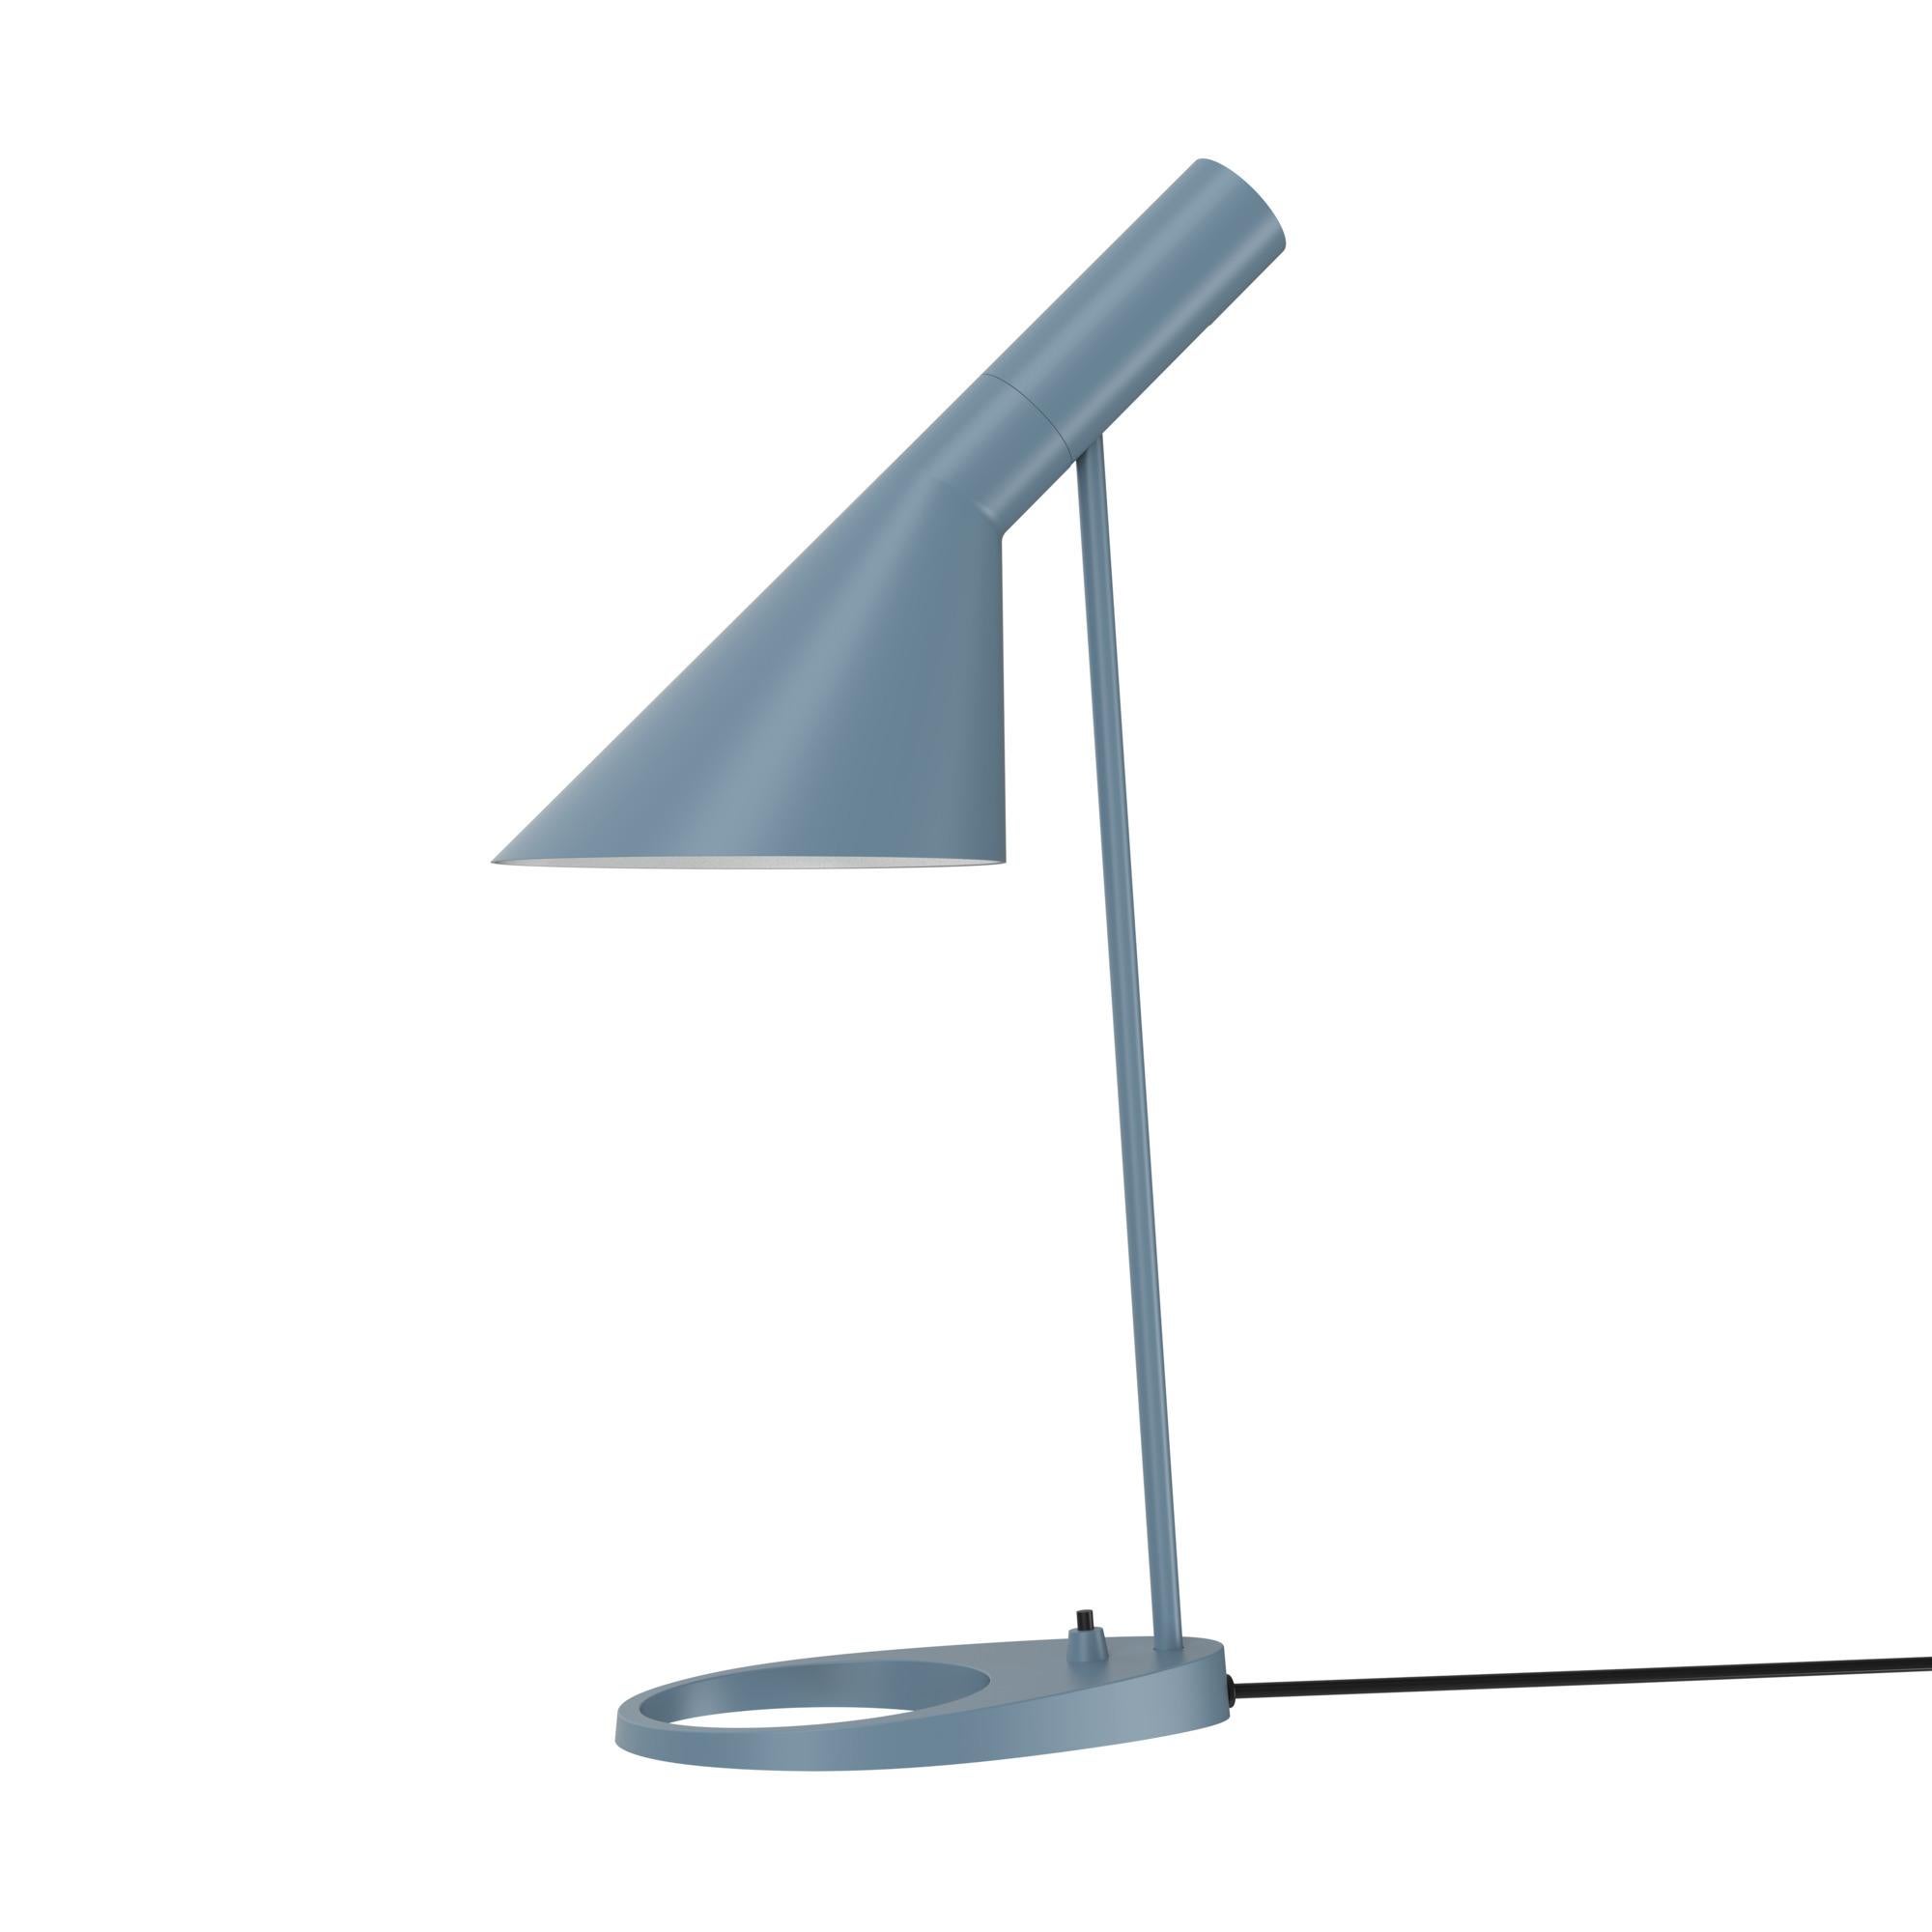 Arne Jacobsen AJ Table Lamp in Electric Orange for Louis Poulsen For Sale 2